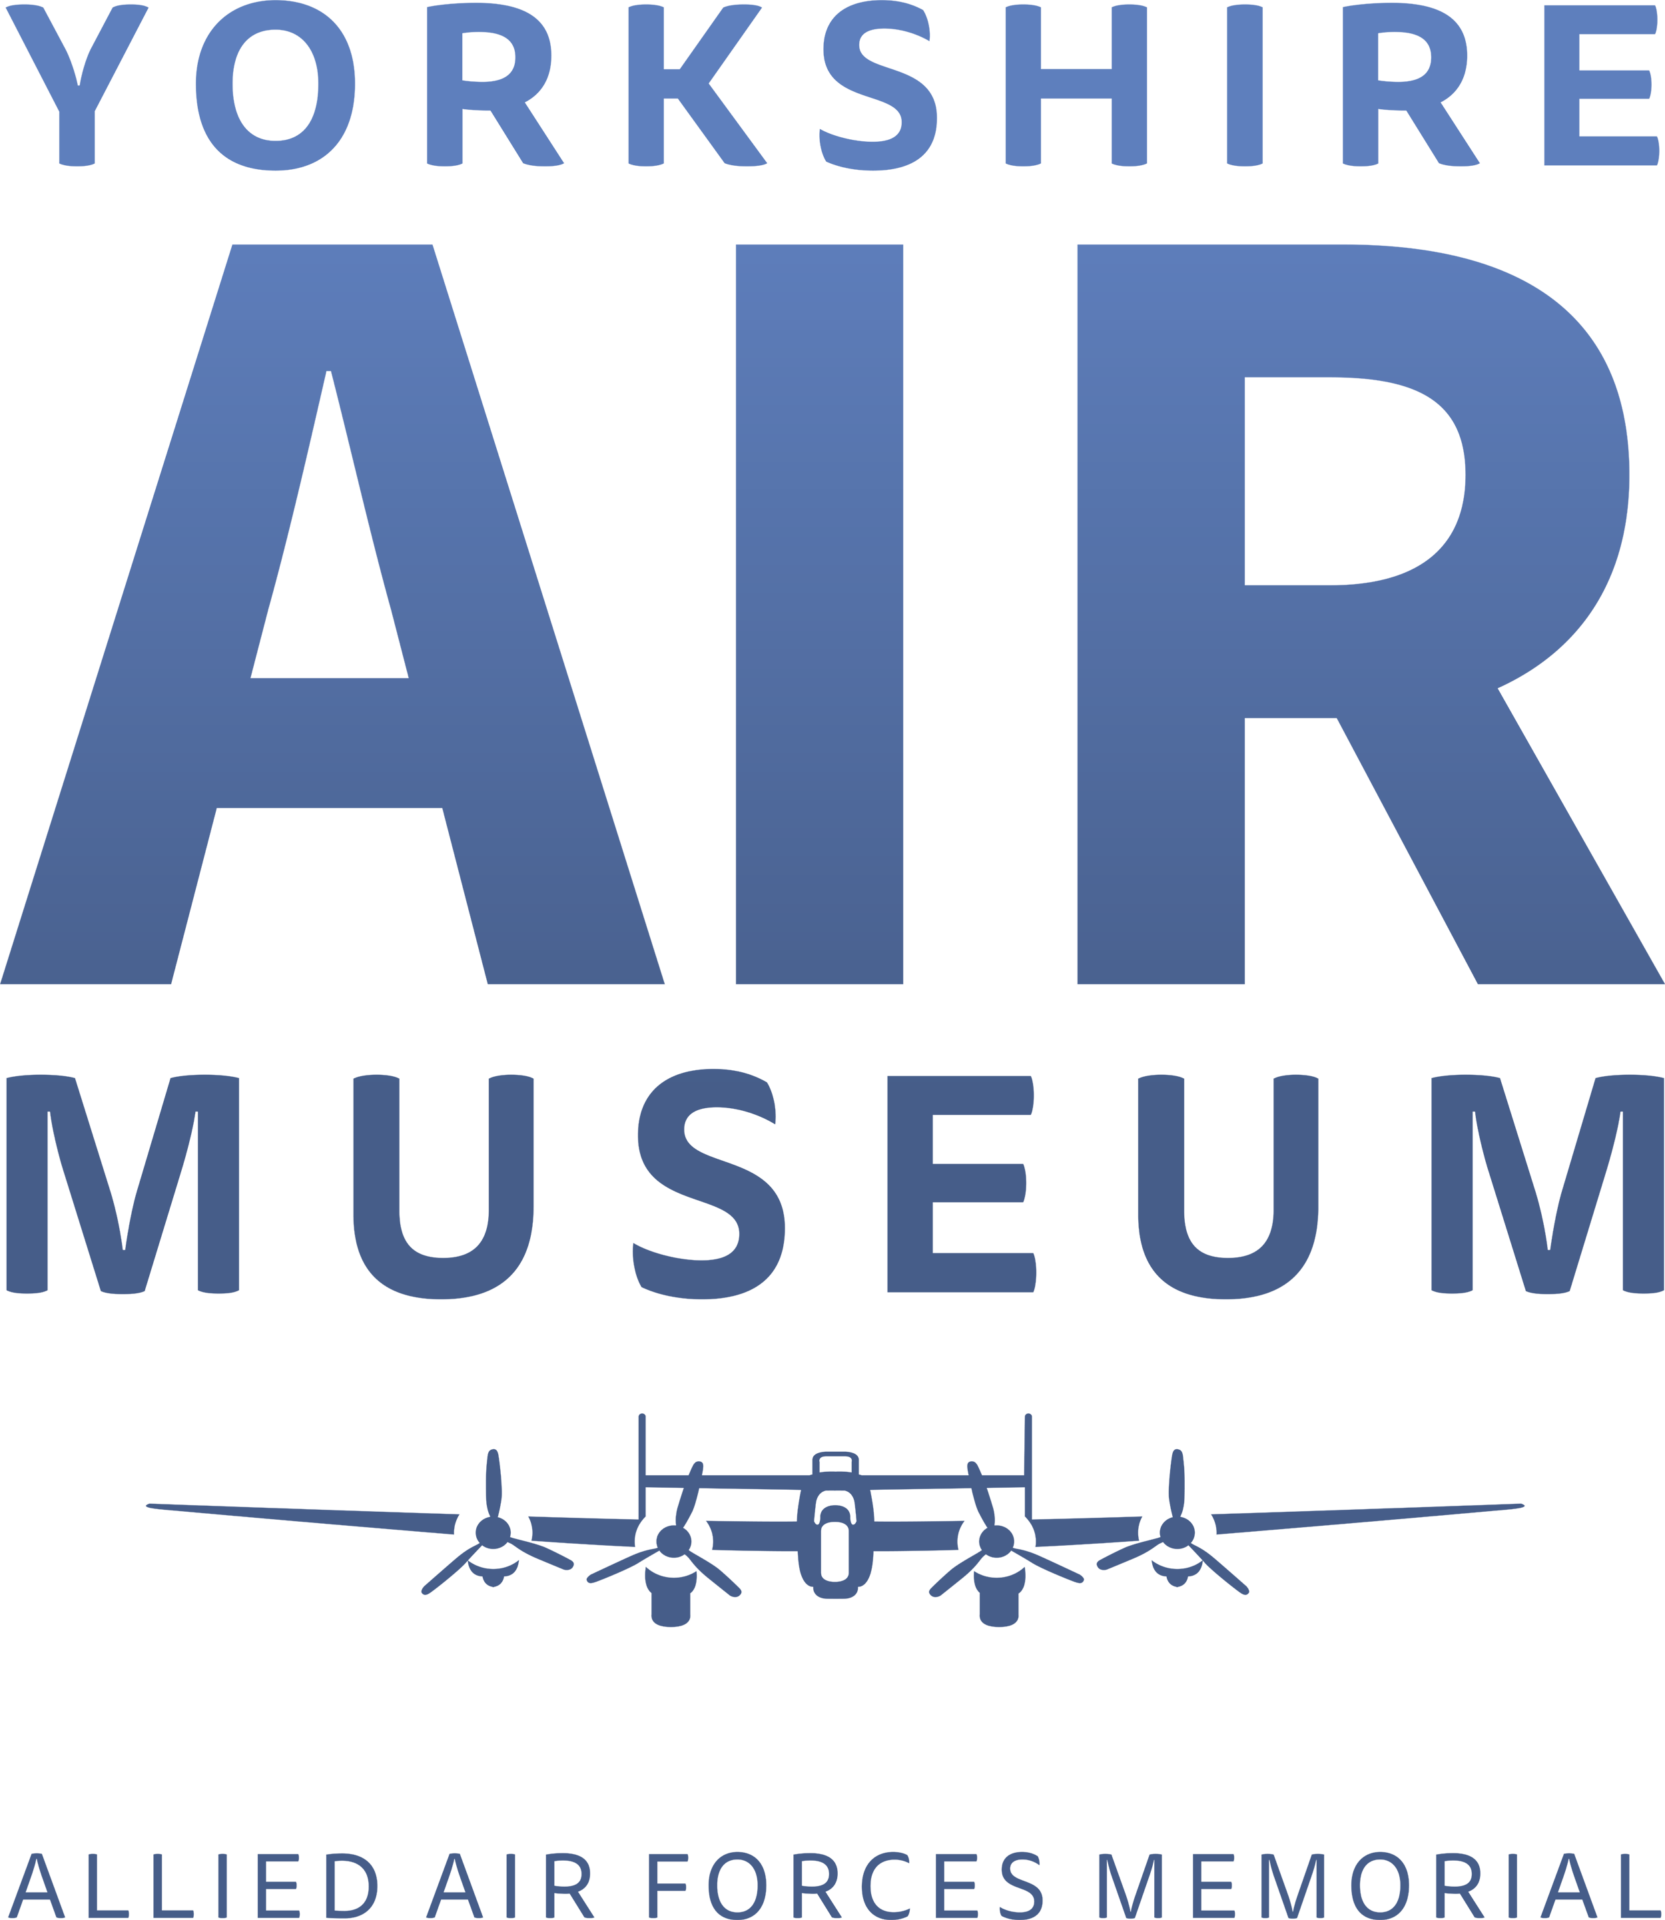 yorkshire air museum logo